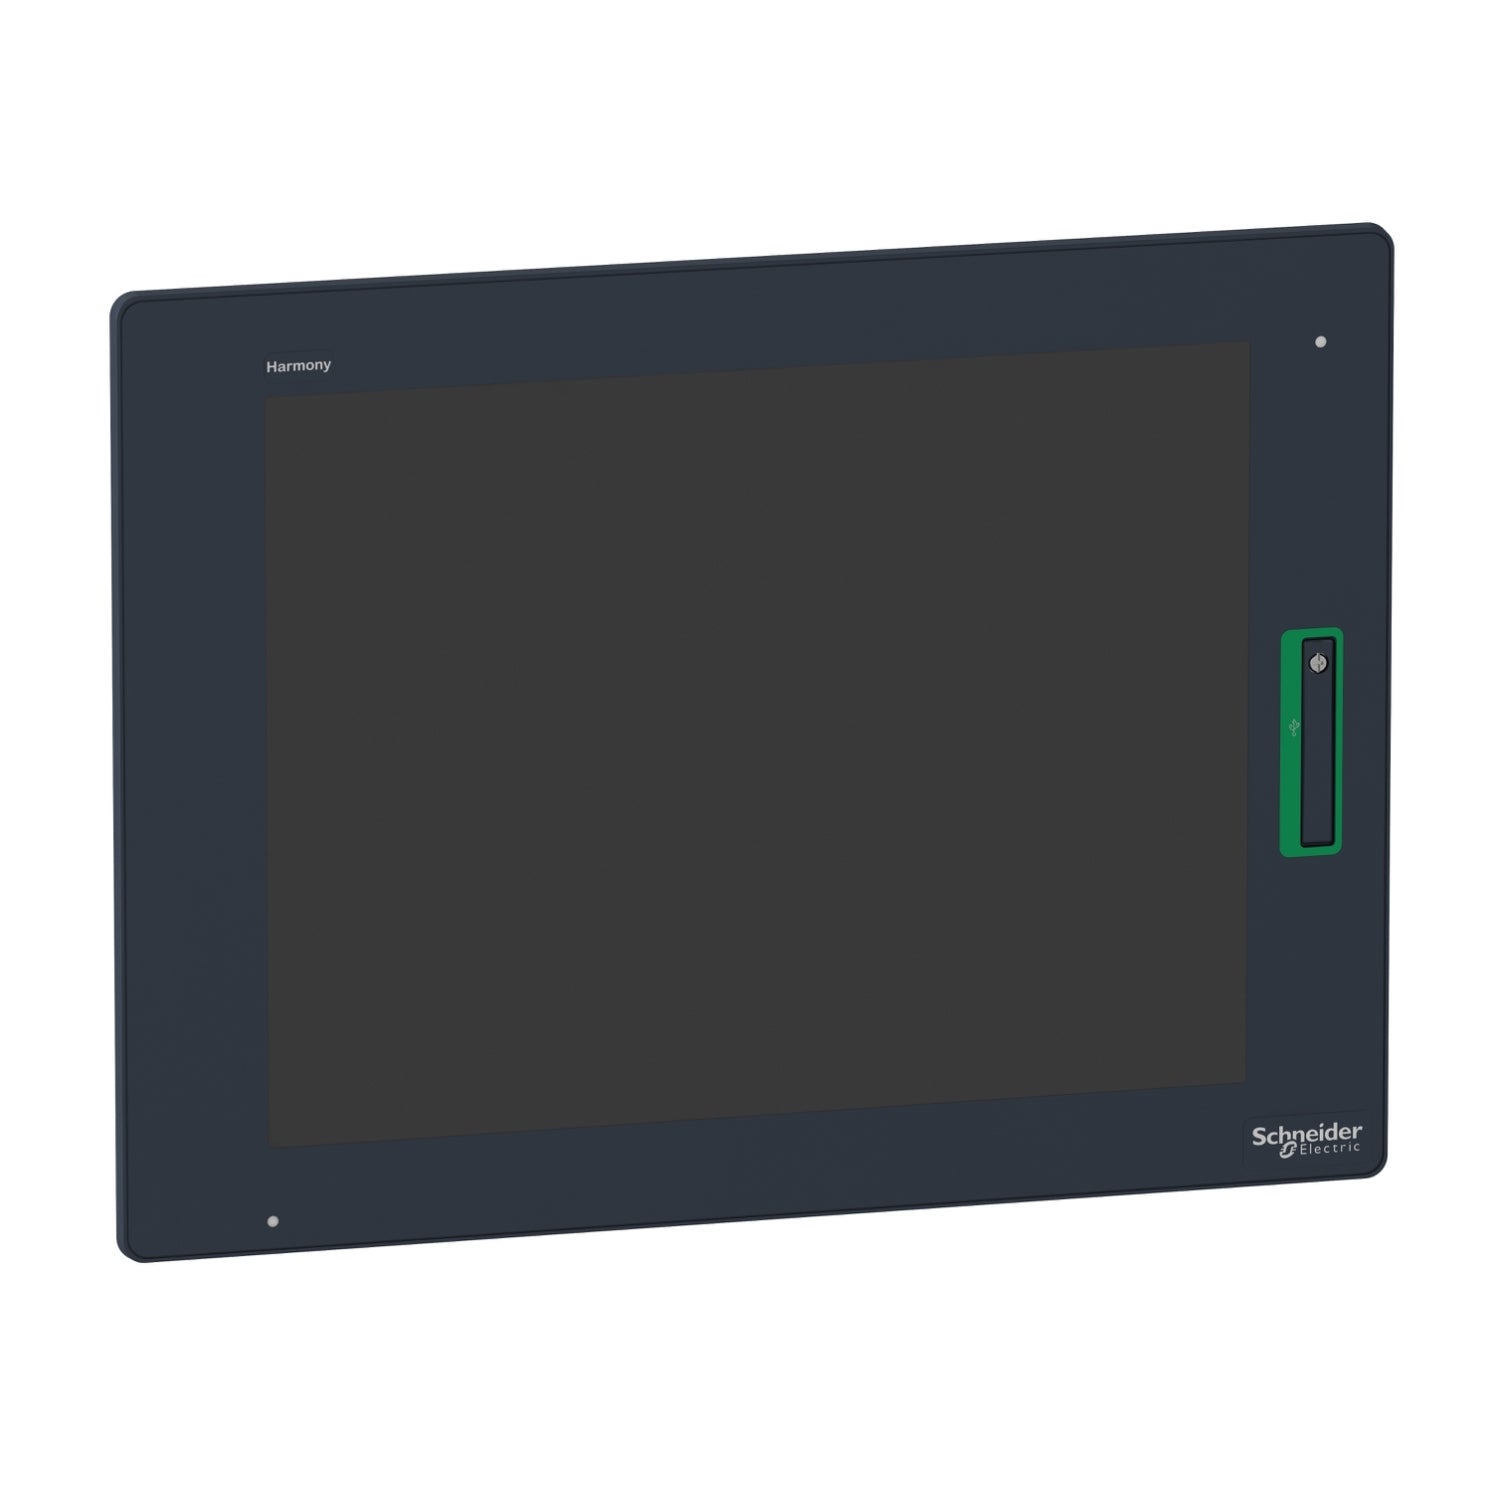 HMIDT732 | Schneider Electric | Flat screen, Harmony GTU, 15inch wide display, 1024 x 768pixels XGA